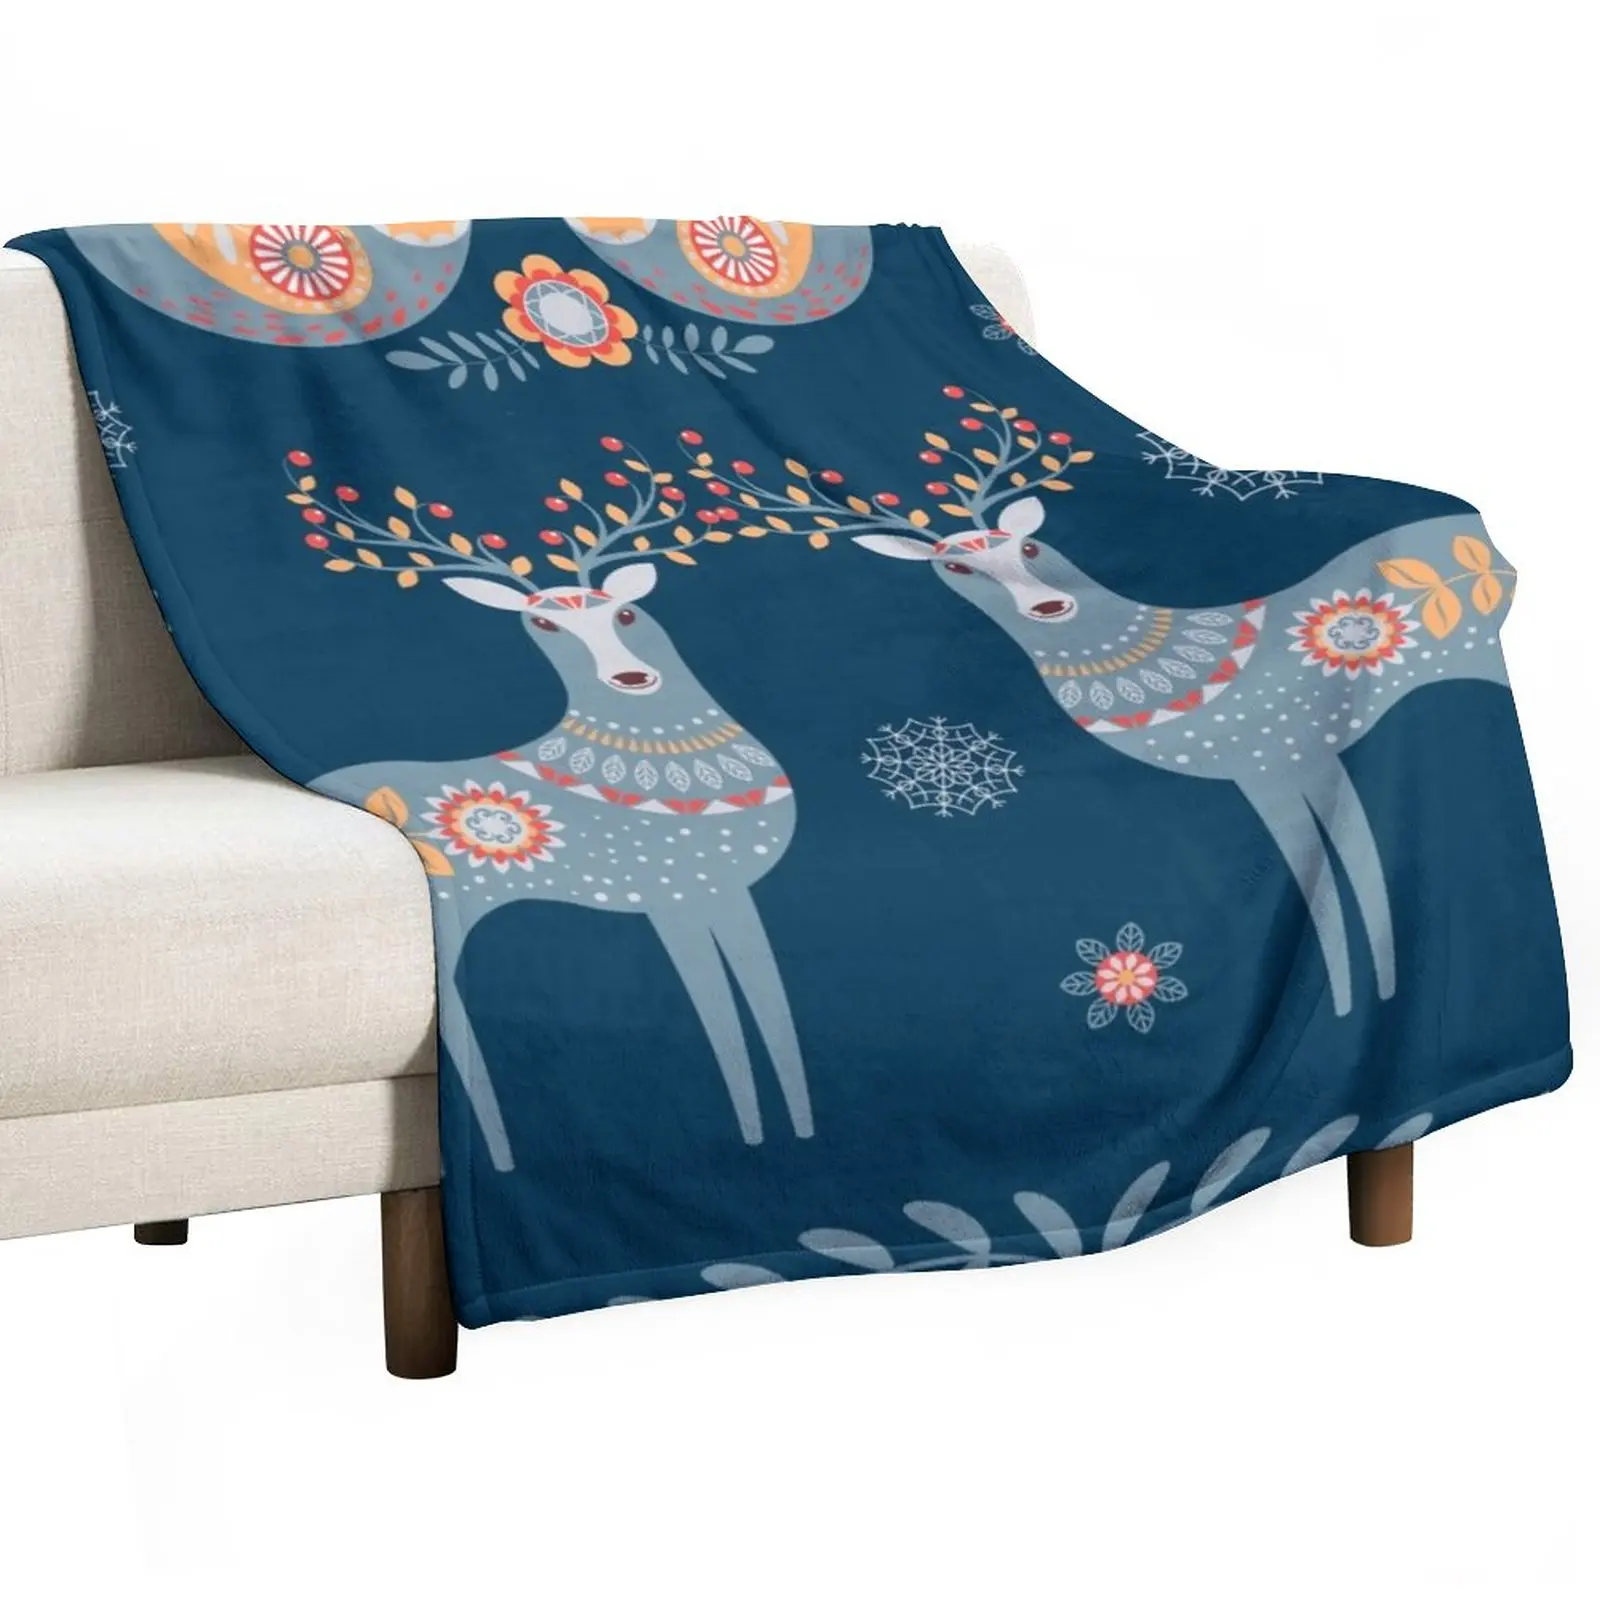 

Nordic Winter Blue Throw Blanket Blankets Sofas Of Decoration sofa bed Sofa Throw Blanket Dorm Room Essentials